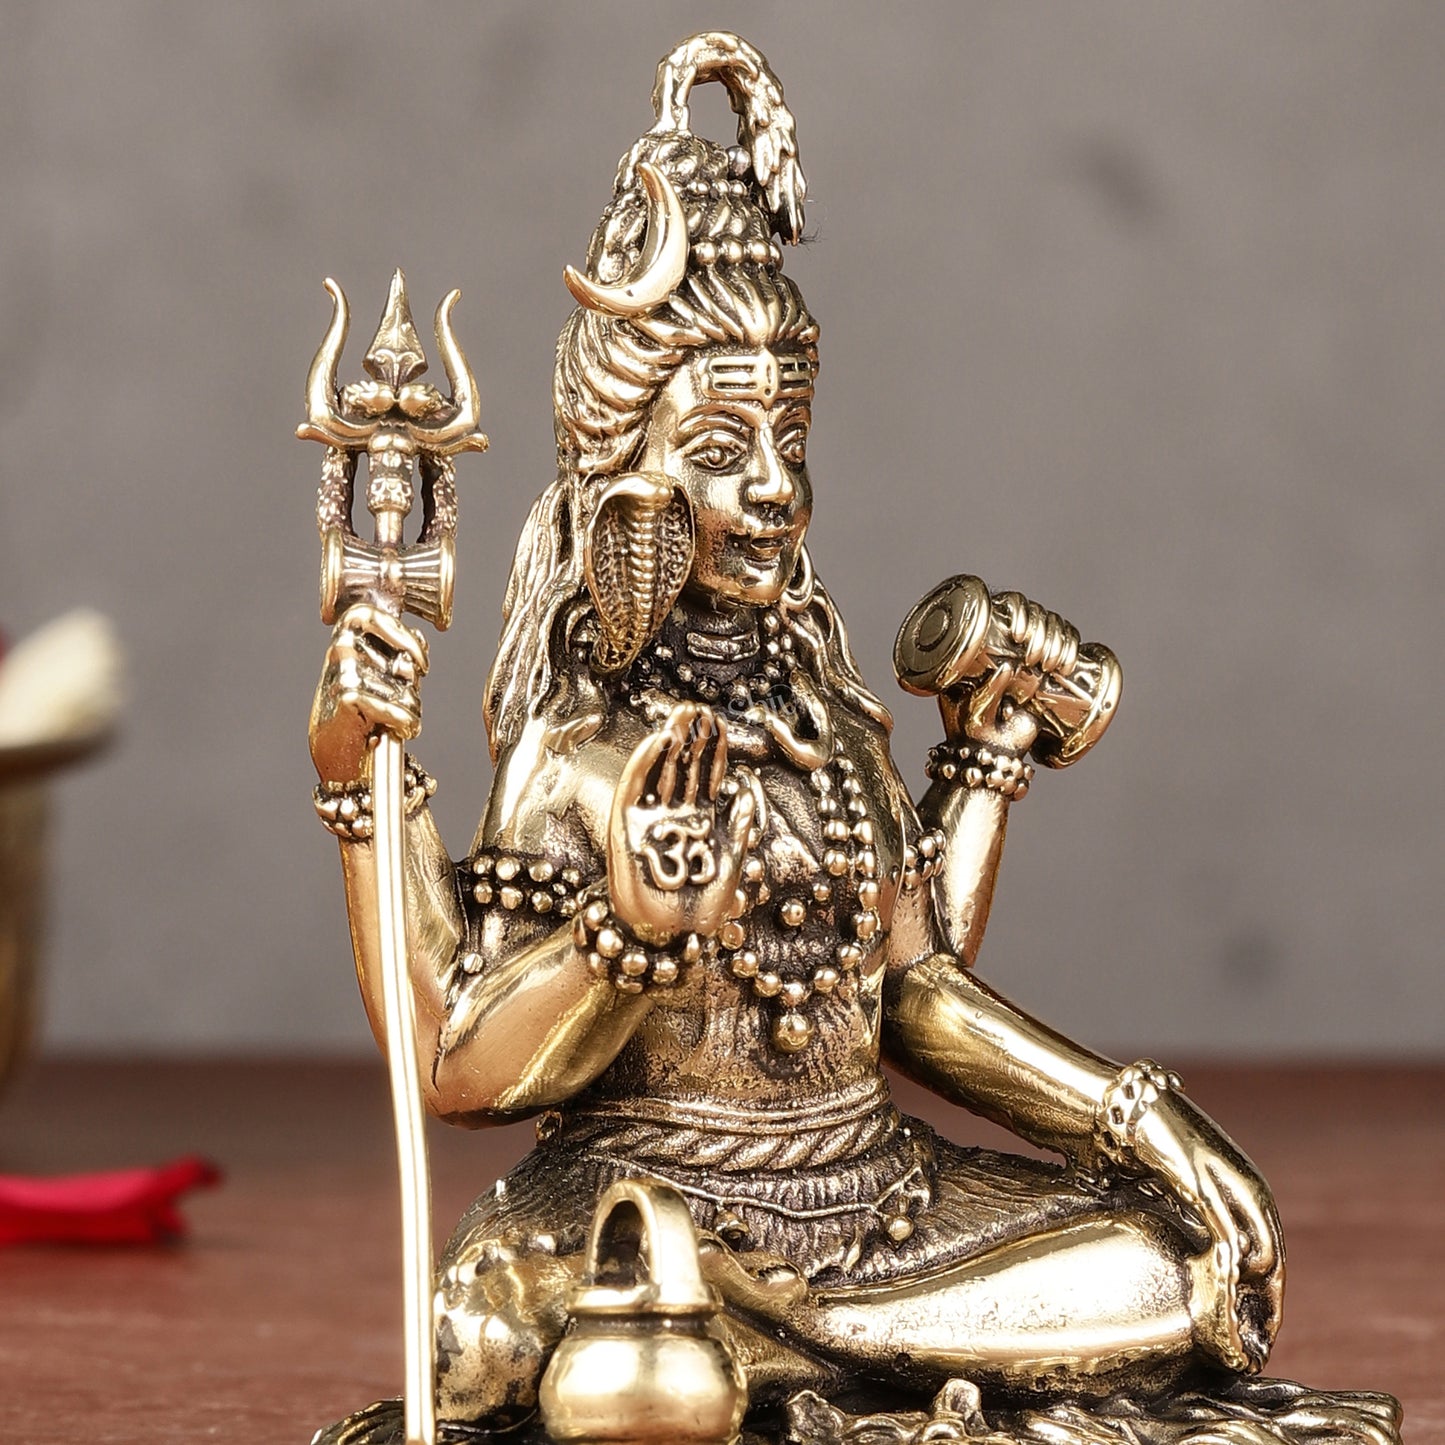 Brass Superfine Intricately Crafted Lord Shiva Idol - 3.5"